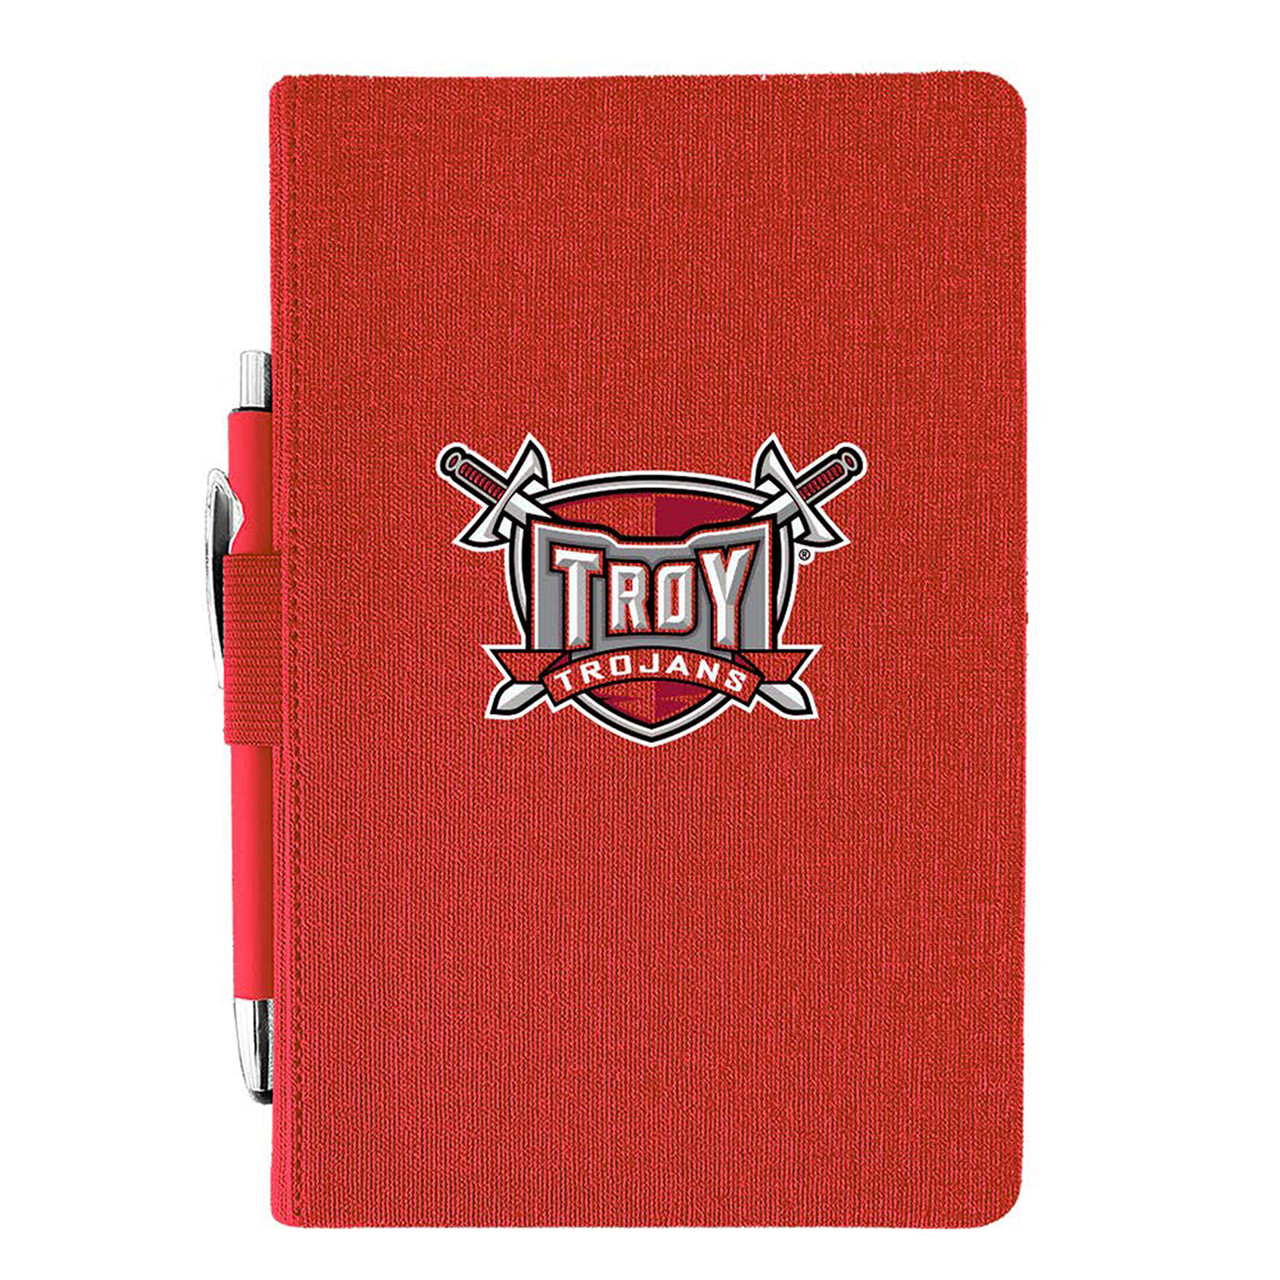 Troy University Trojans Journal with Pen